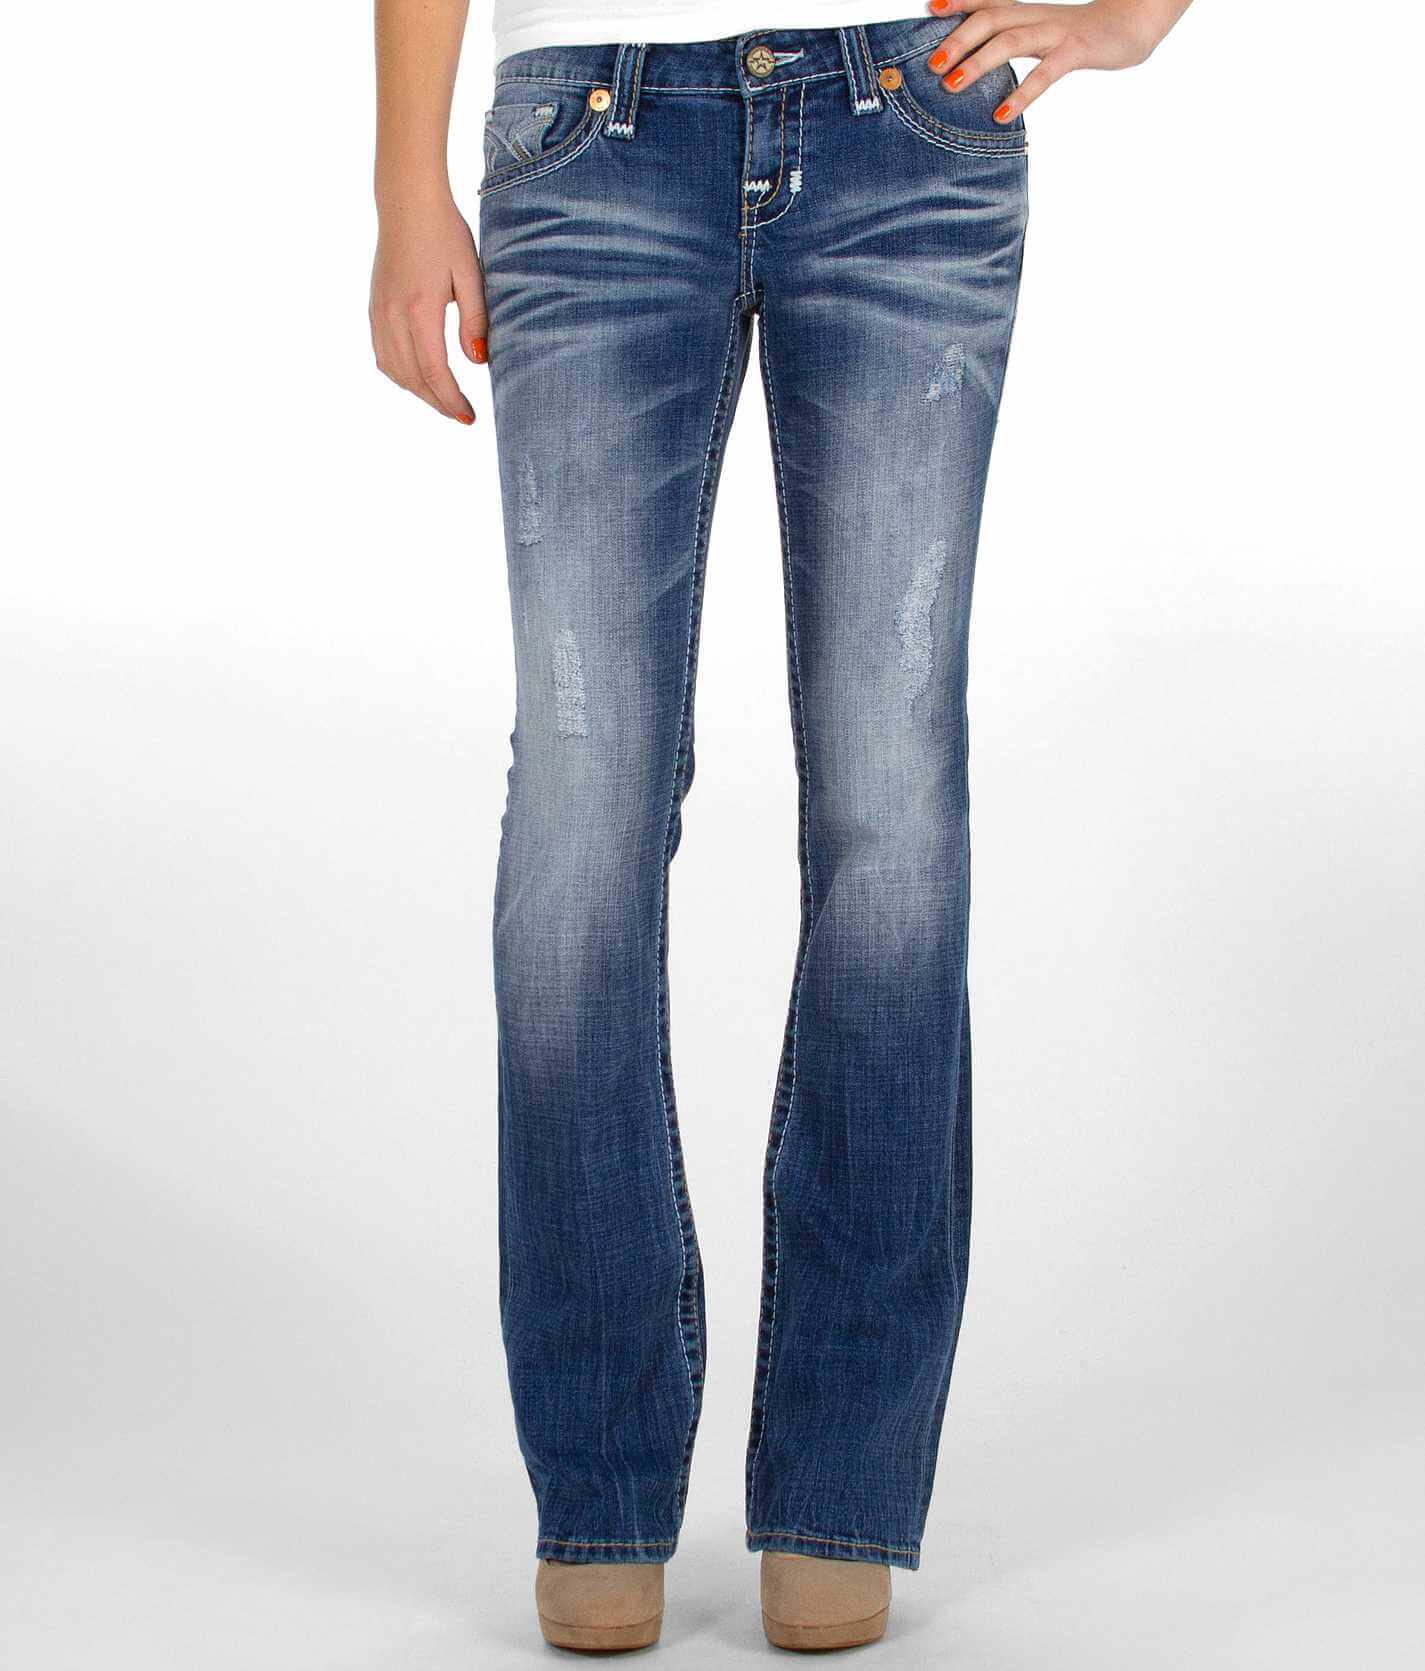 american apparel jean shorts